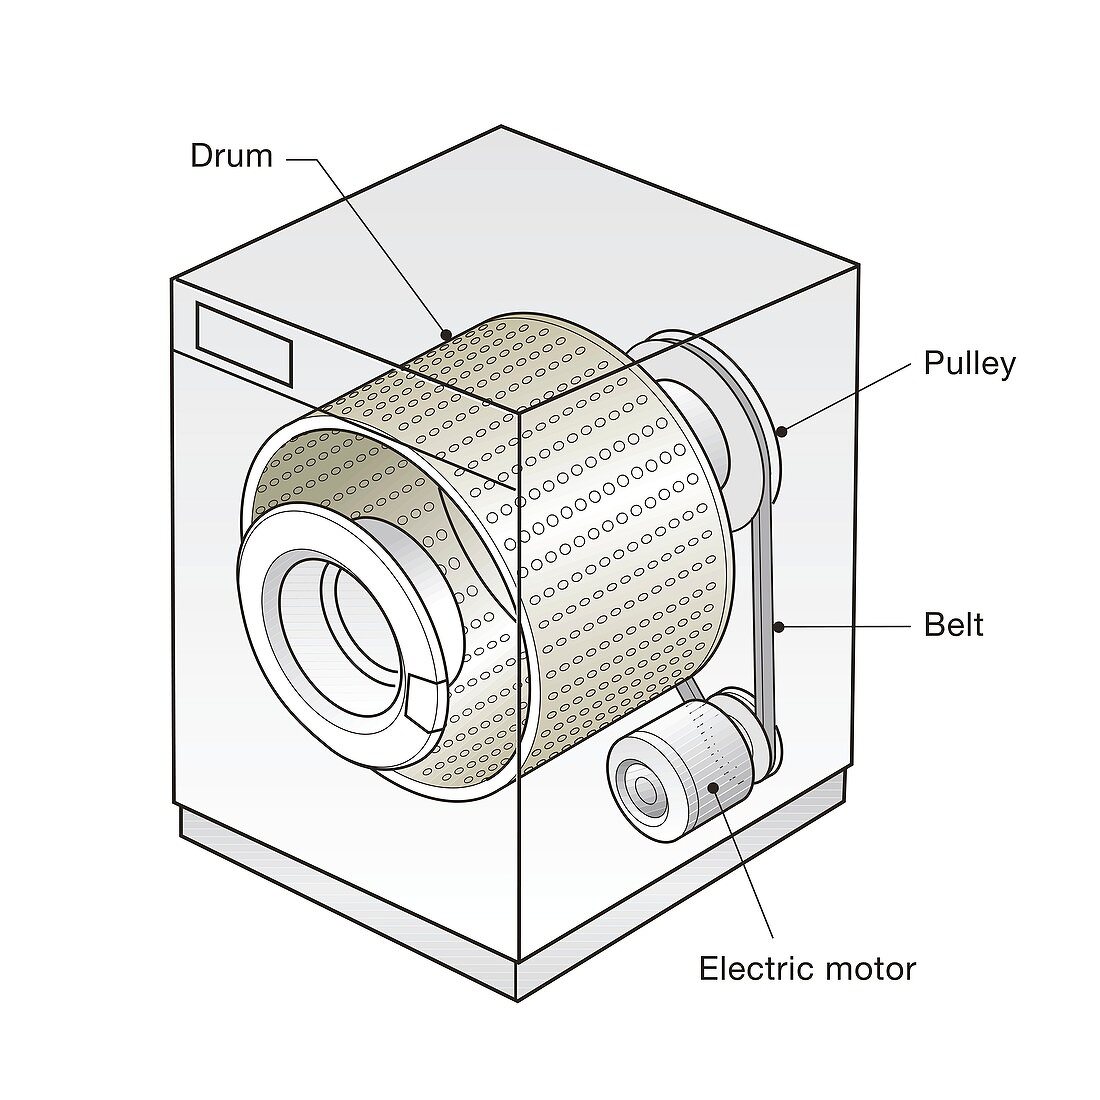 Spin dryer mechanism, illustration